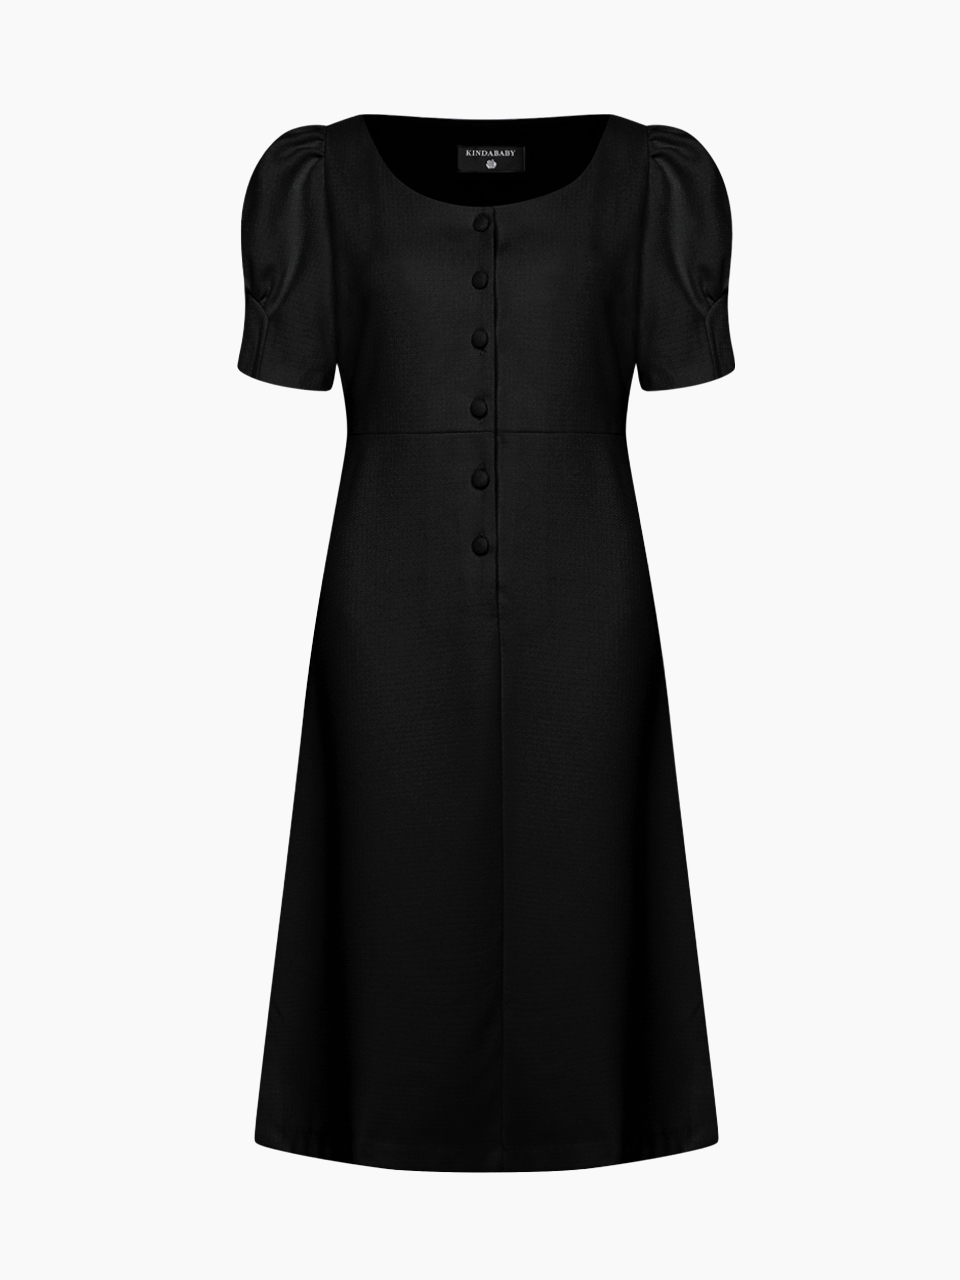 Bliss classic tweed dress - black